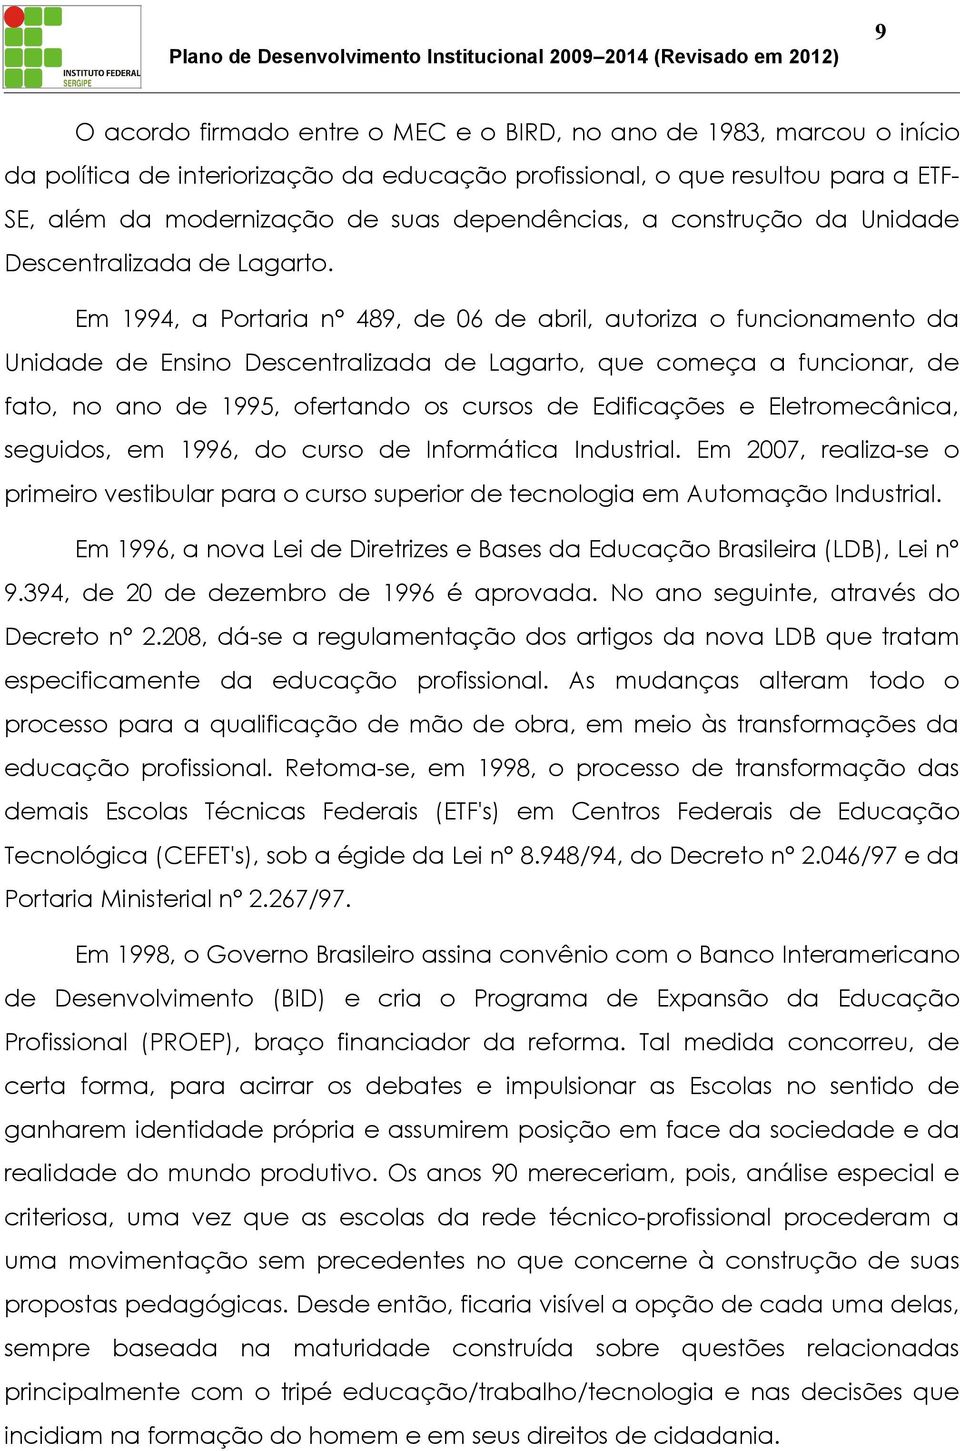 Em 1994, a Portaria n 489, de 06 de abril, autoriza o funcionamento da Unidade de Ensino Descentralizada de Lagarto, que começa a funcionar, de fato, no ano de 1995, ofertando os cursos de